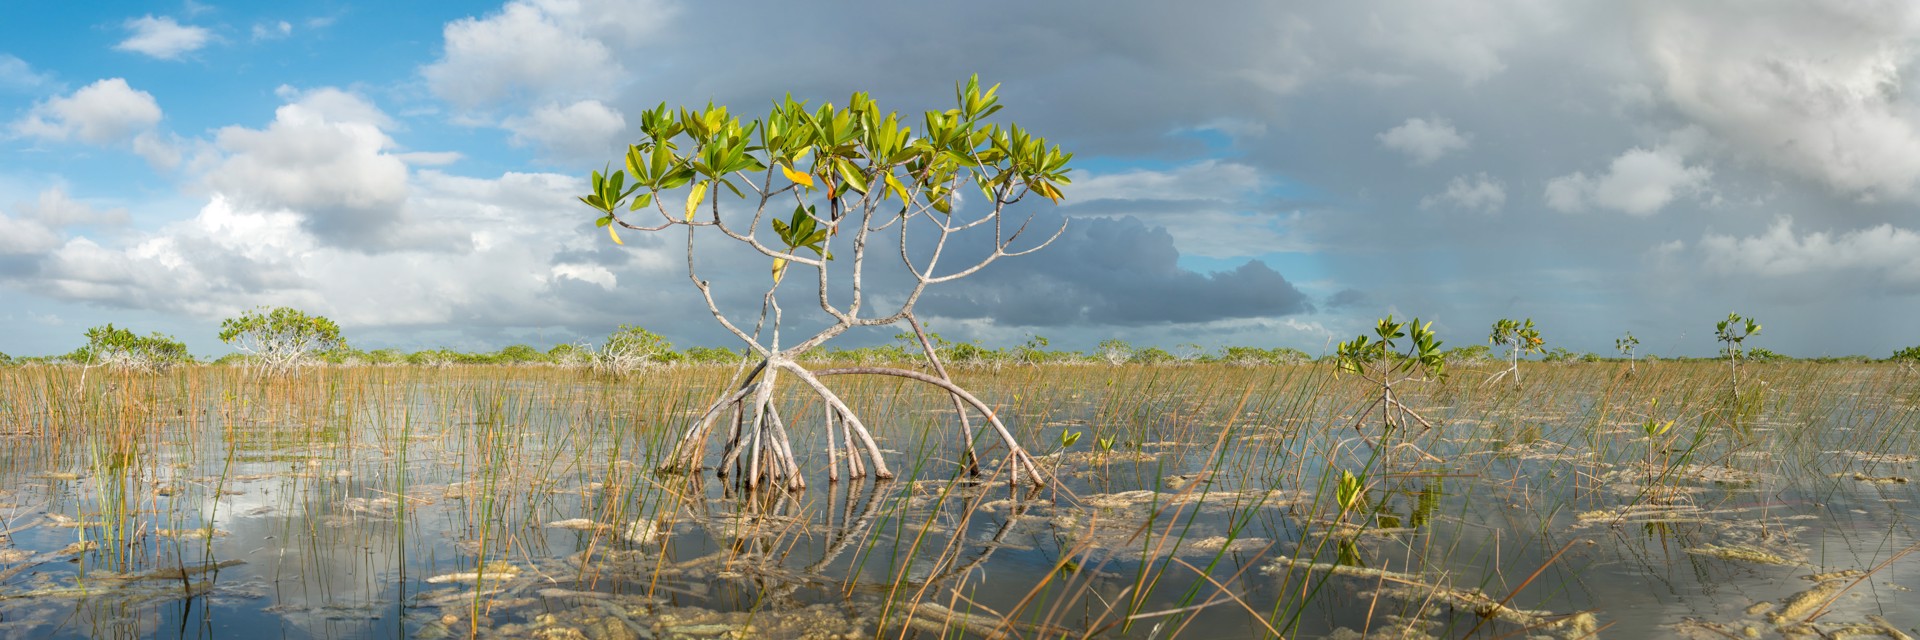 Everglades Mangrove by Carlton Ward Jr